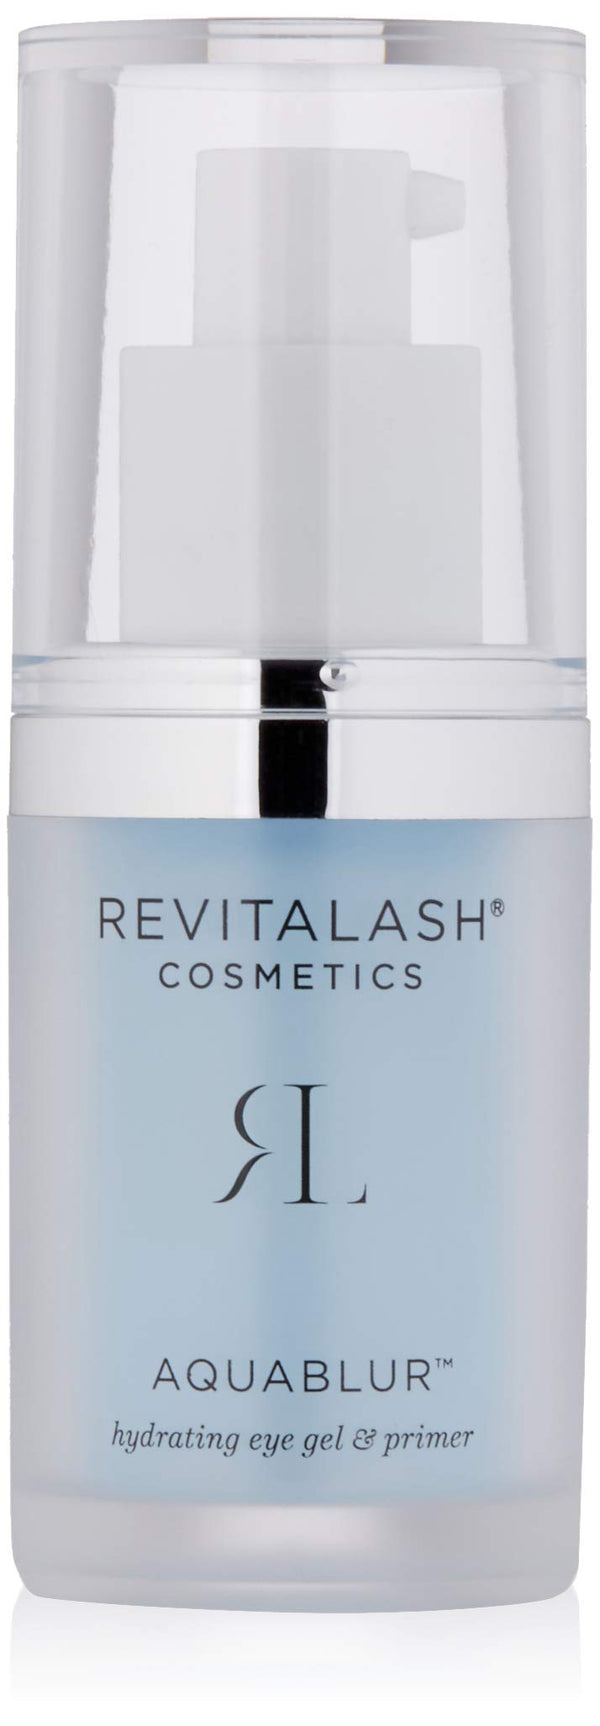 RevitaLash Cosmetics, Aquablur Hydrating Eye Gel & Primer, Hypoallergenic & Cruelty Free